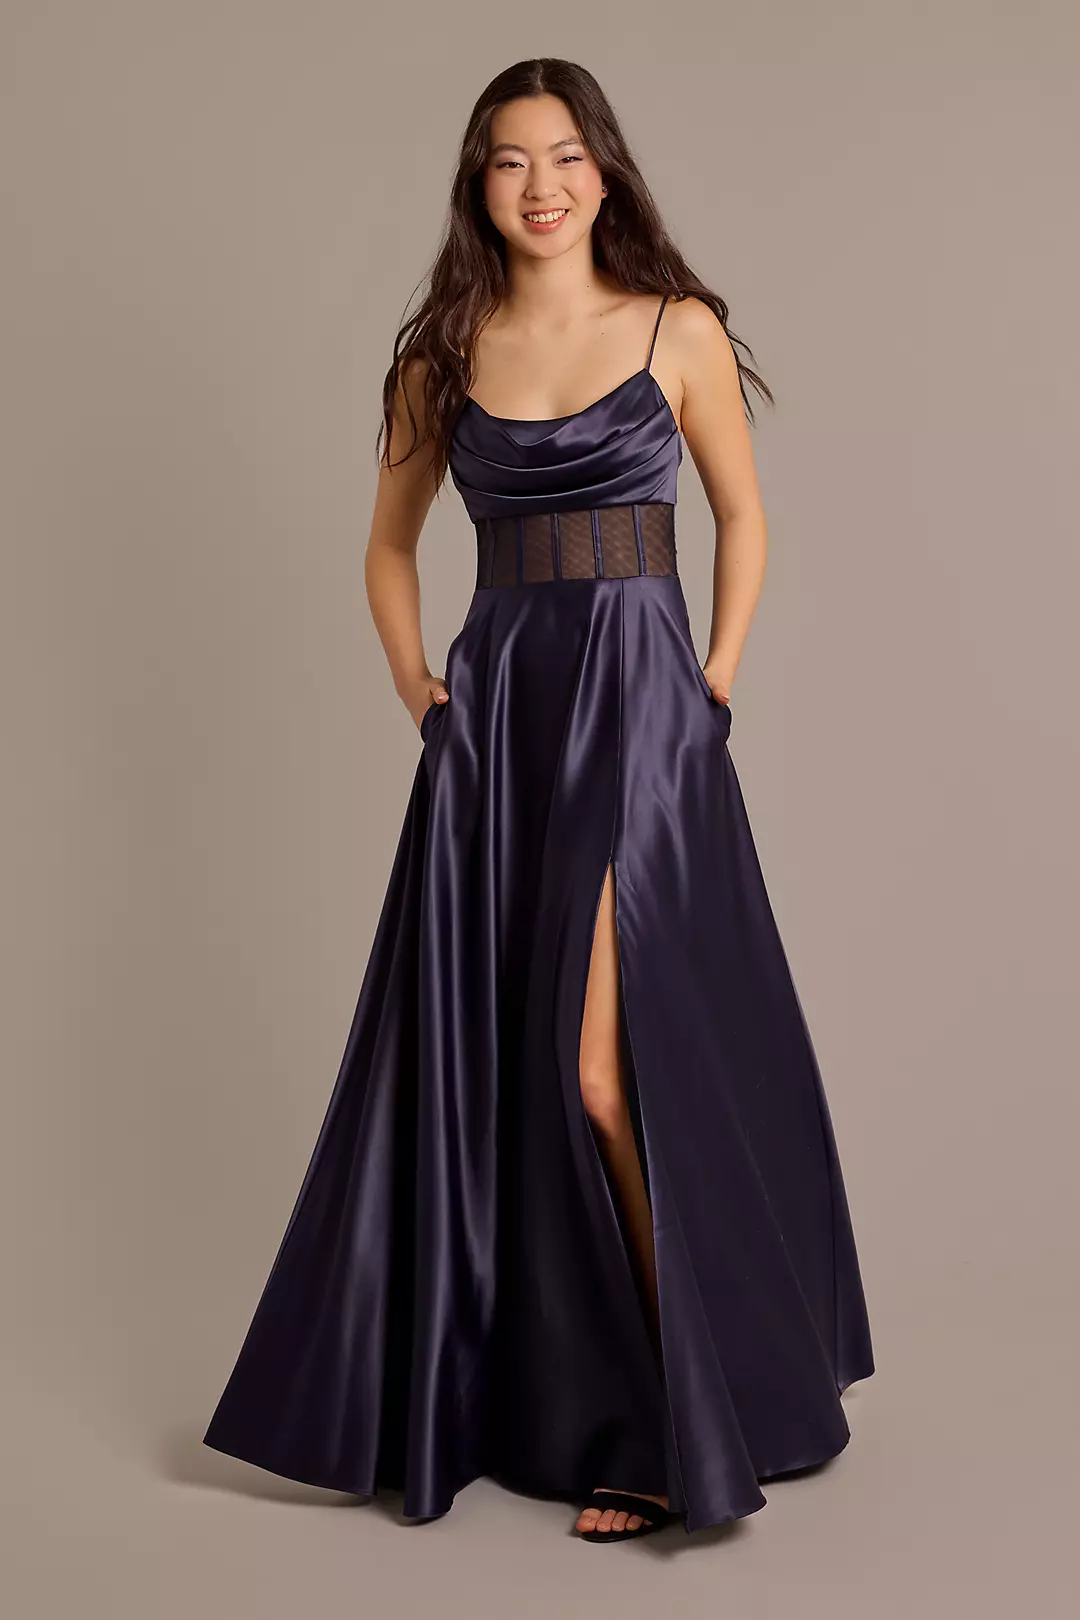 Illusion Corset Bodice Cowl Neck A-Line Dress Image